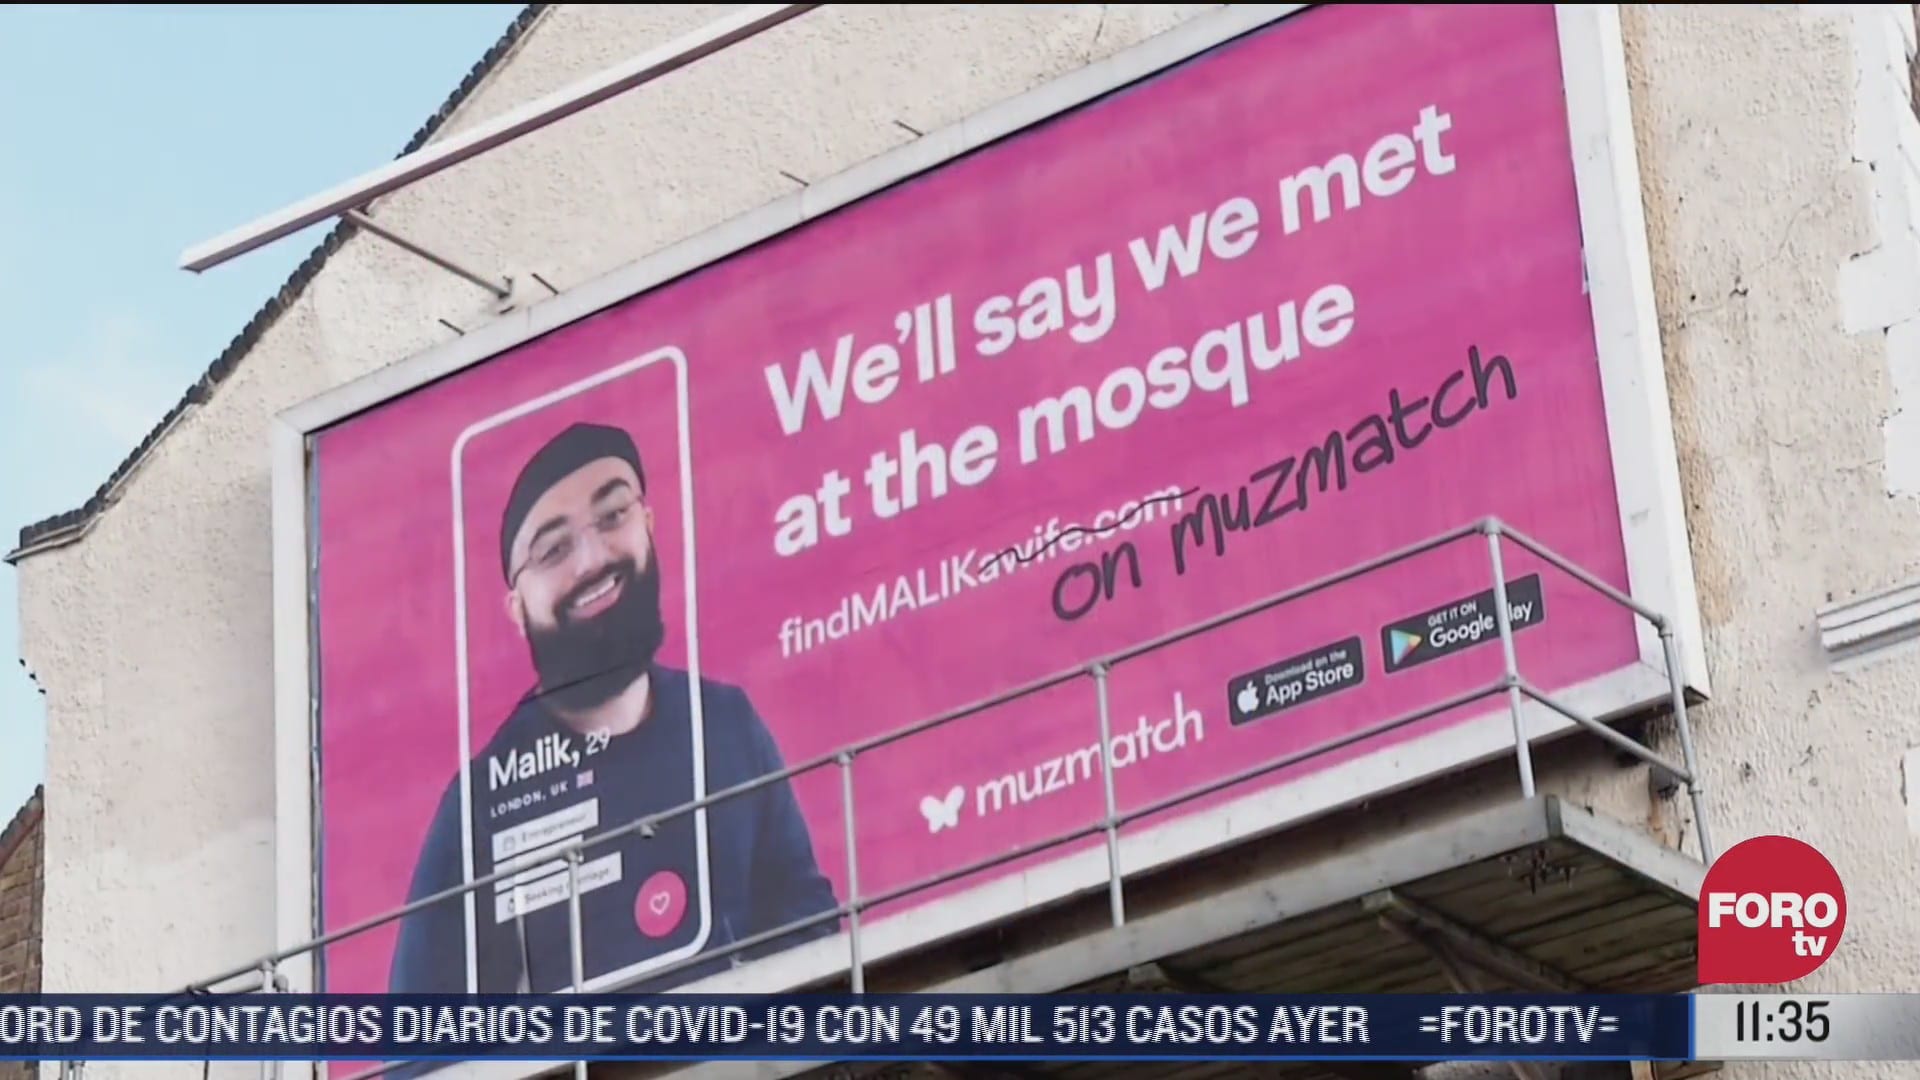 joven musulman lanza campana publicitaria para encontrar esposa